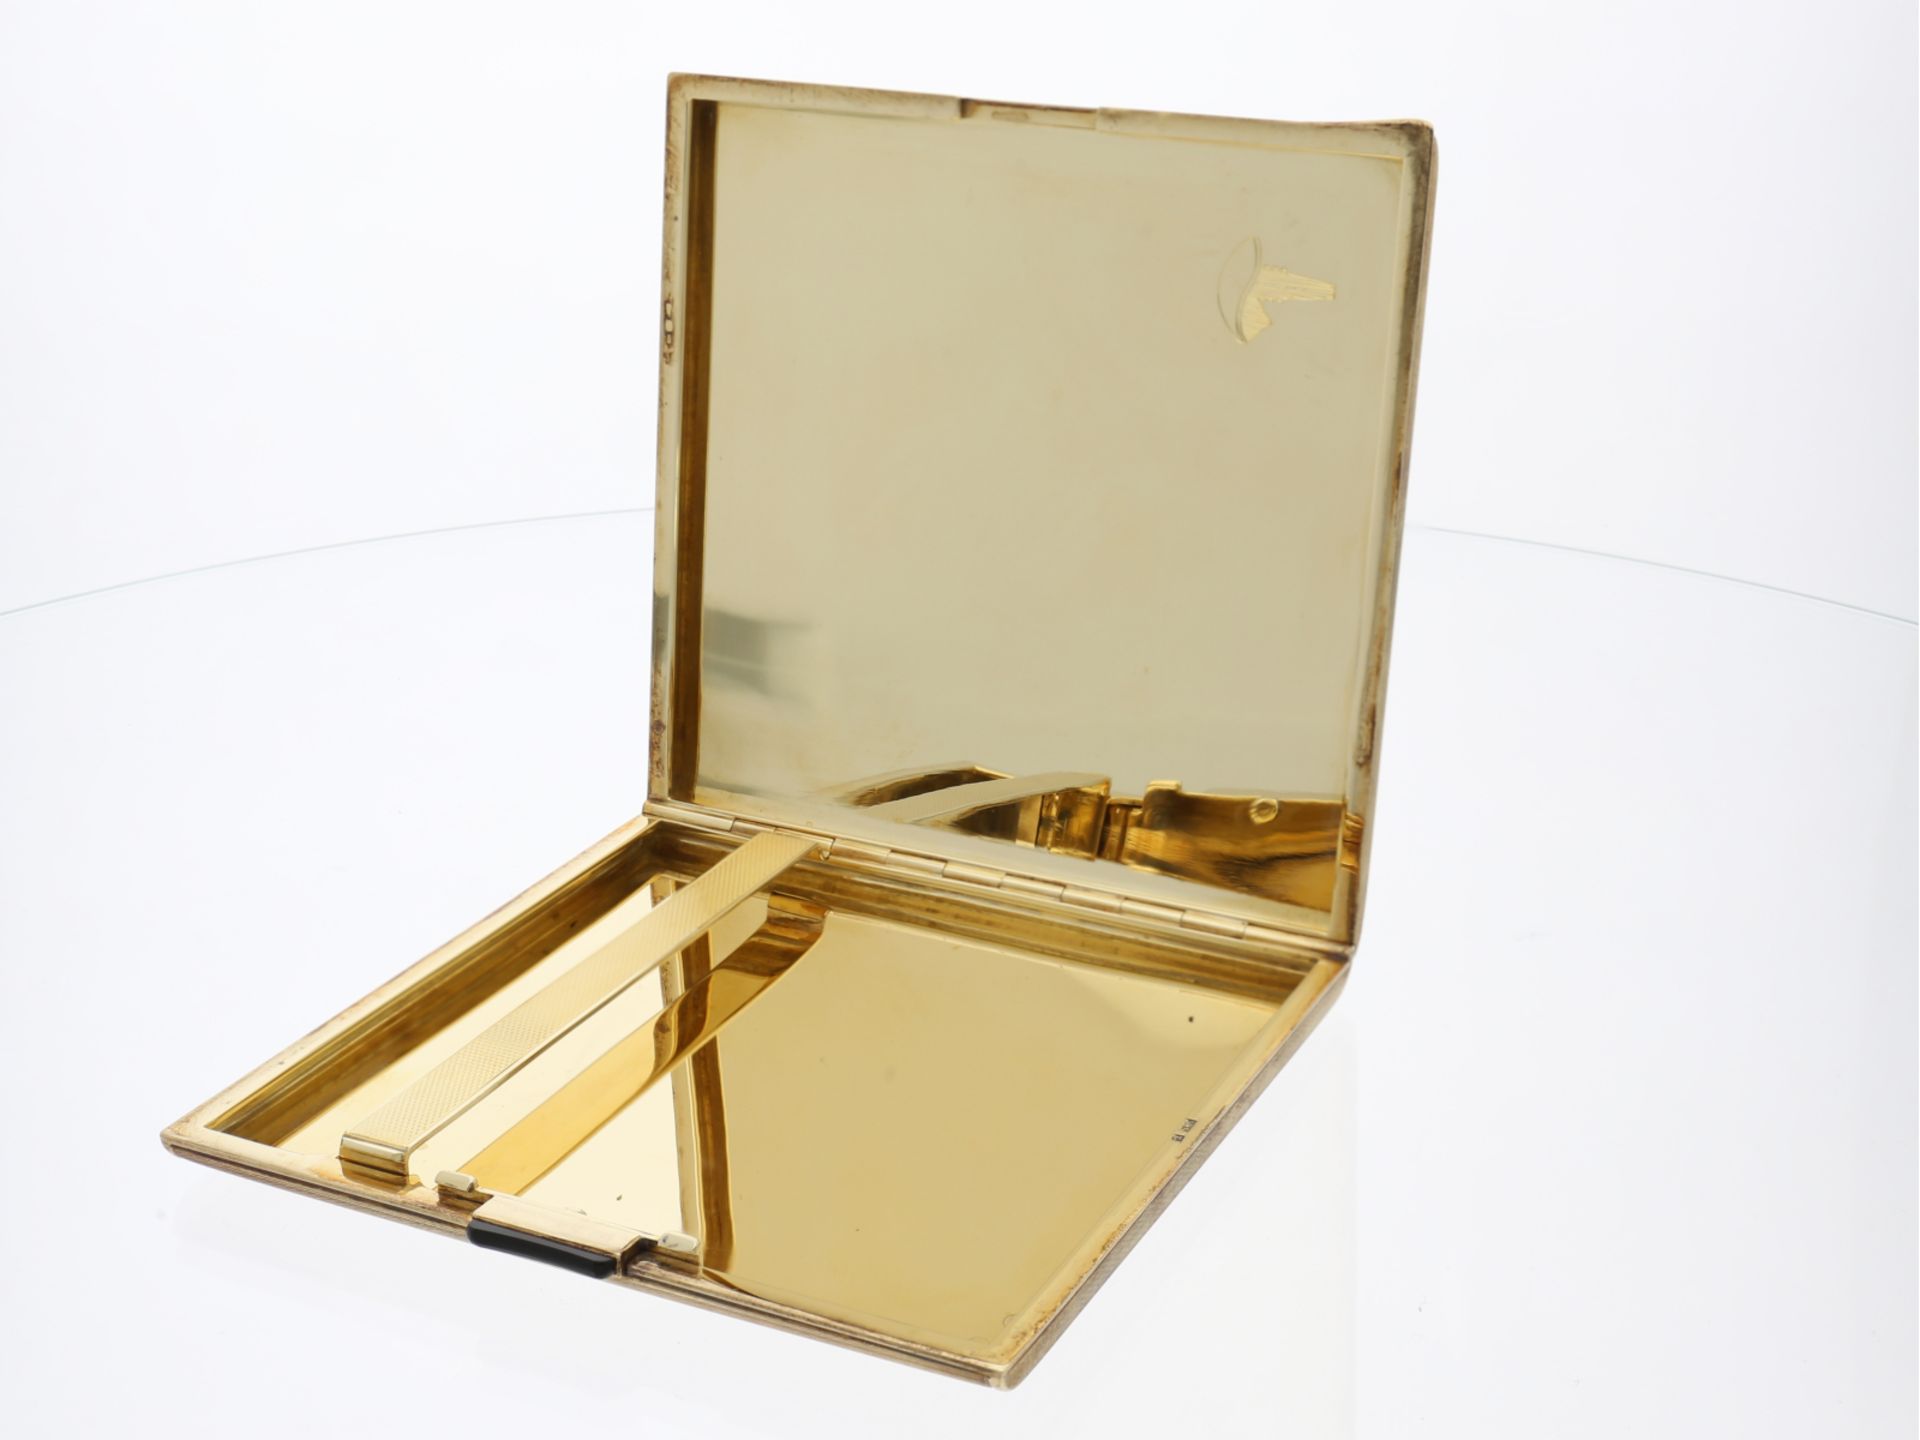 Äußerst luxuriöses goldenes Zigarettenetui, Weyersberg Königsallee Düsseldorf, um 1950, Originalbox - Bild 2 aus 2